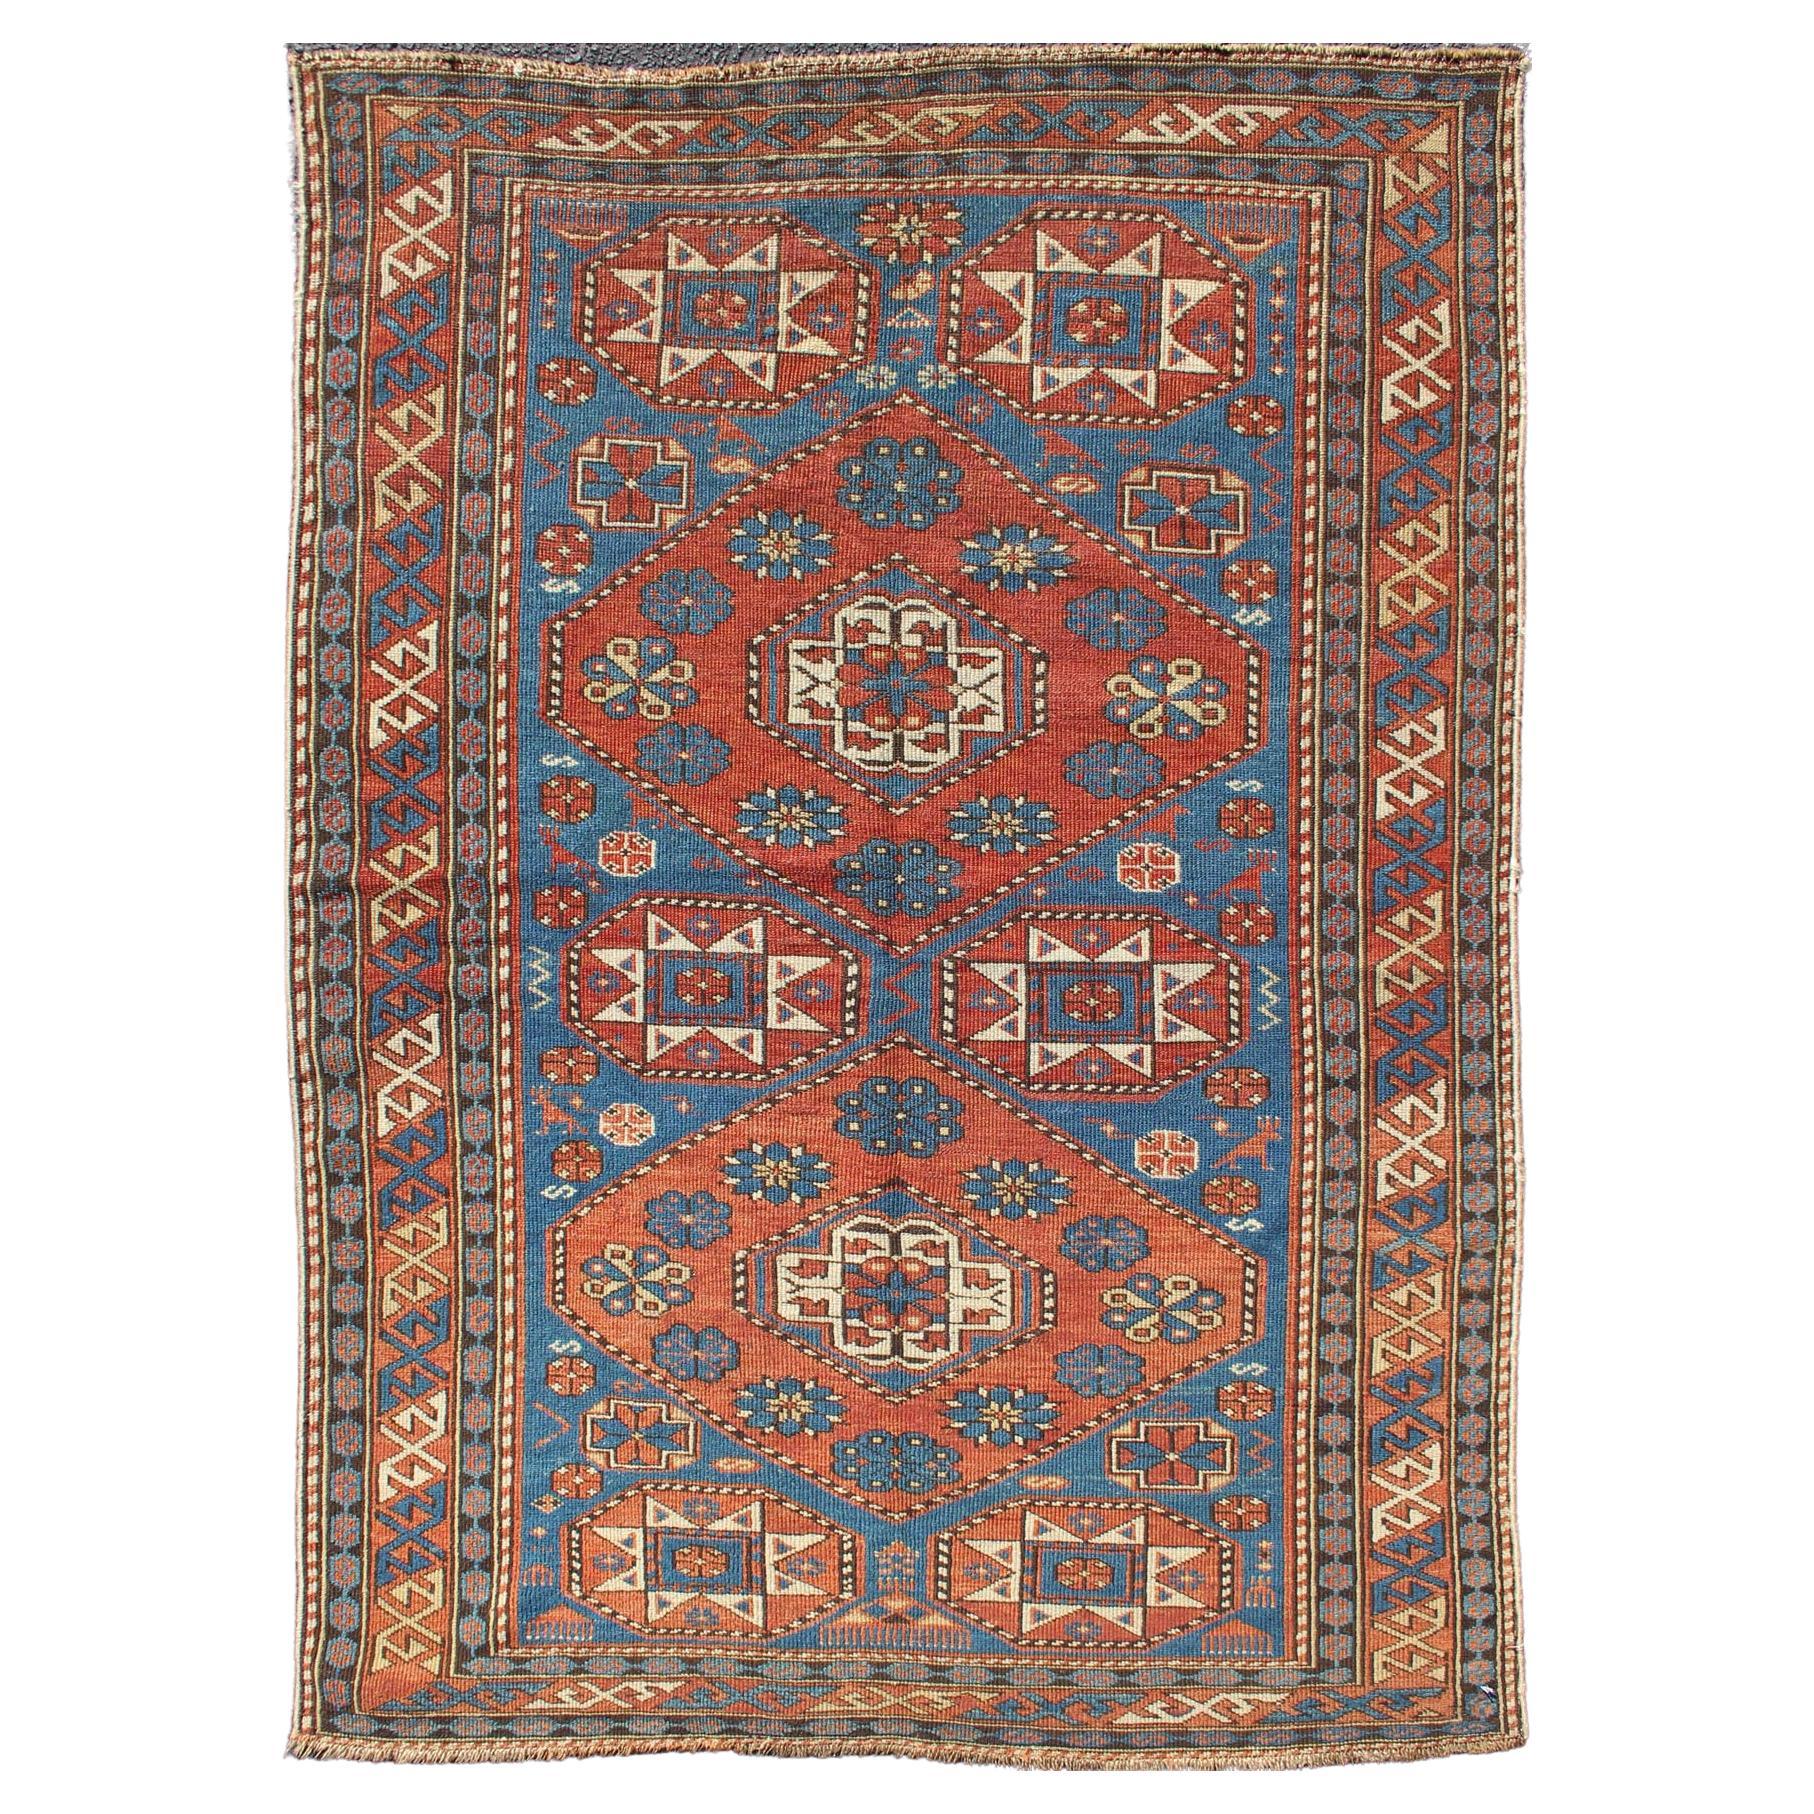  Antique Caucasian Shirvan Rug with Geometric Design in Brunt Orange and Blue  For Sale